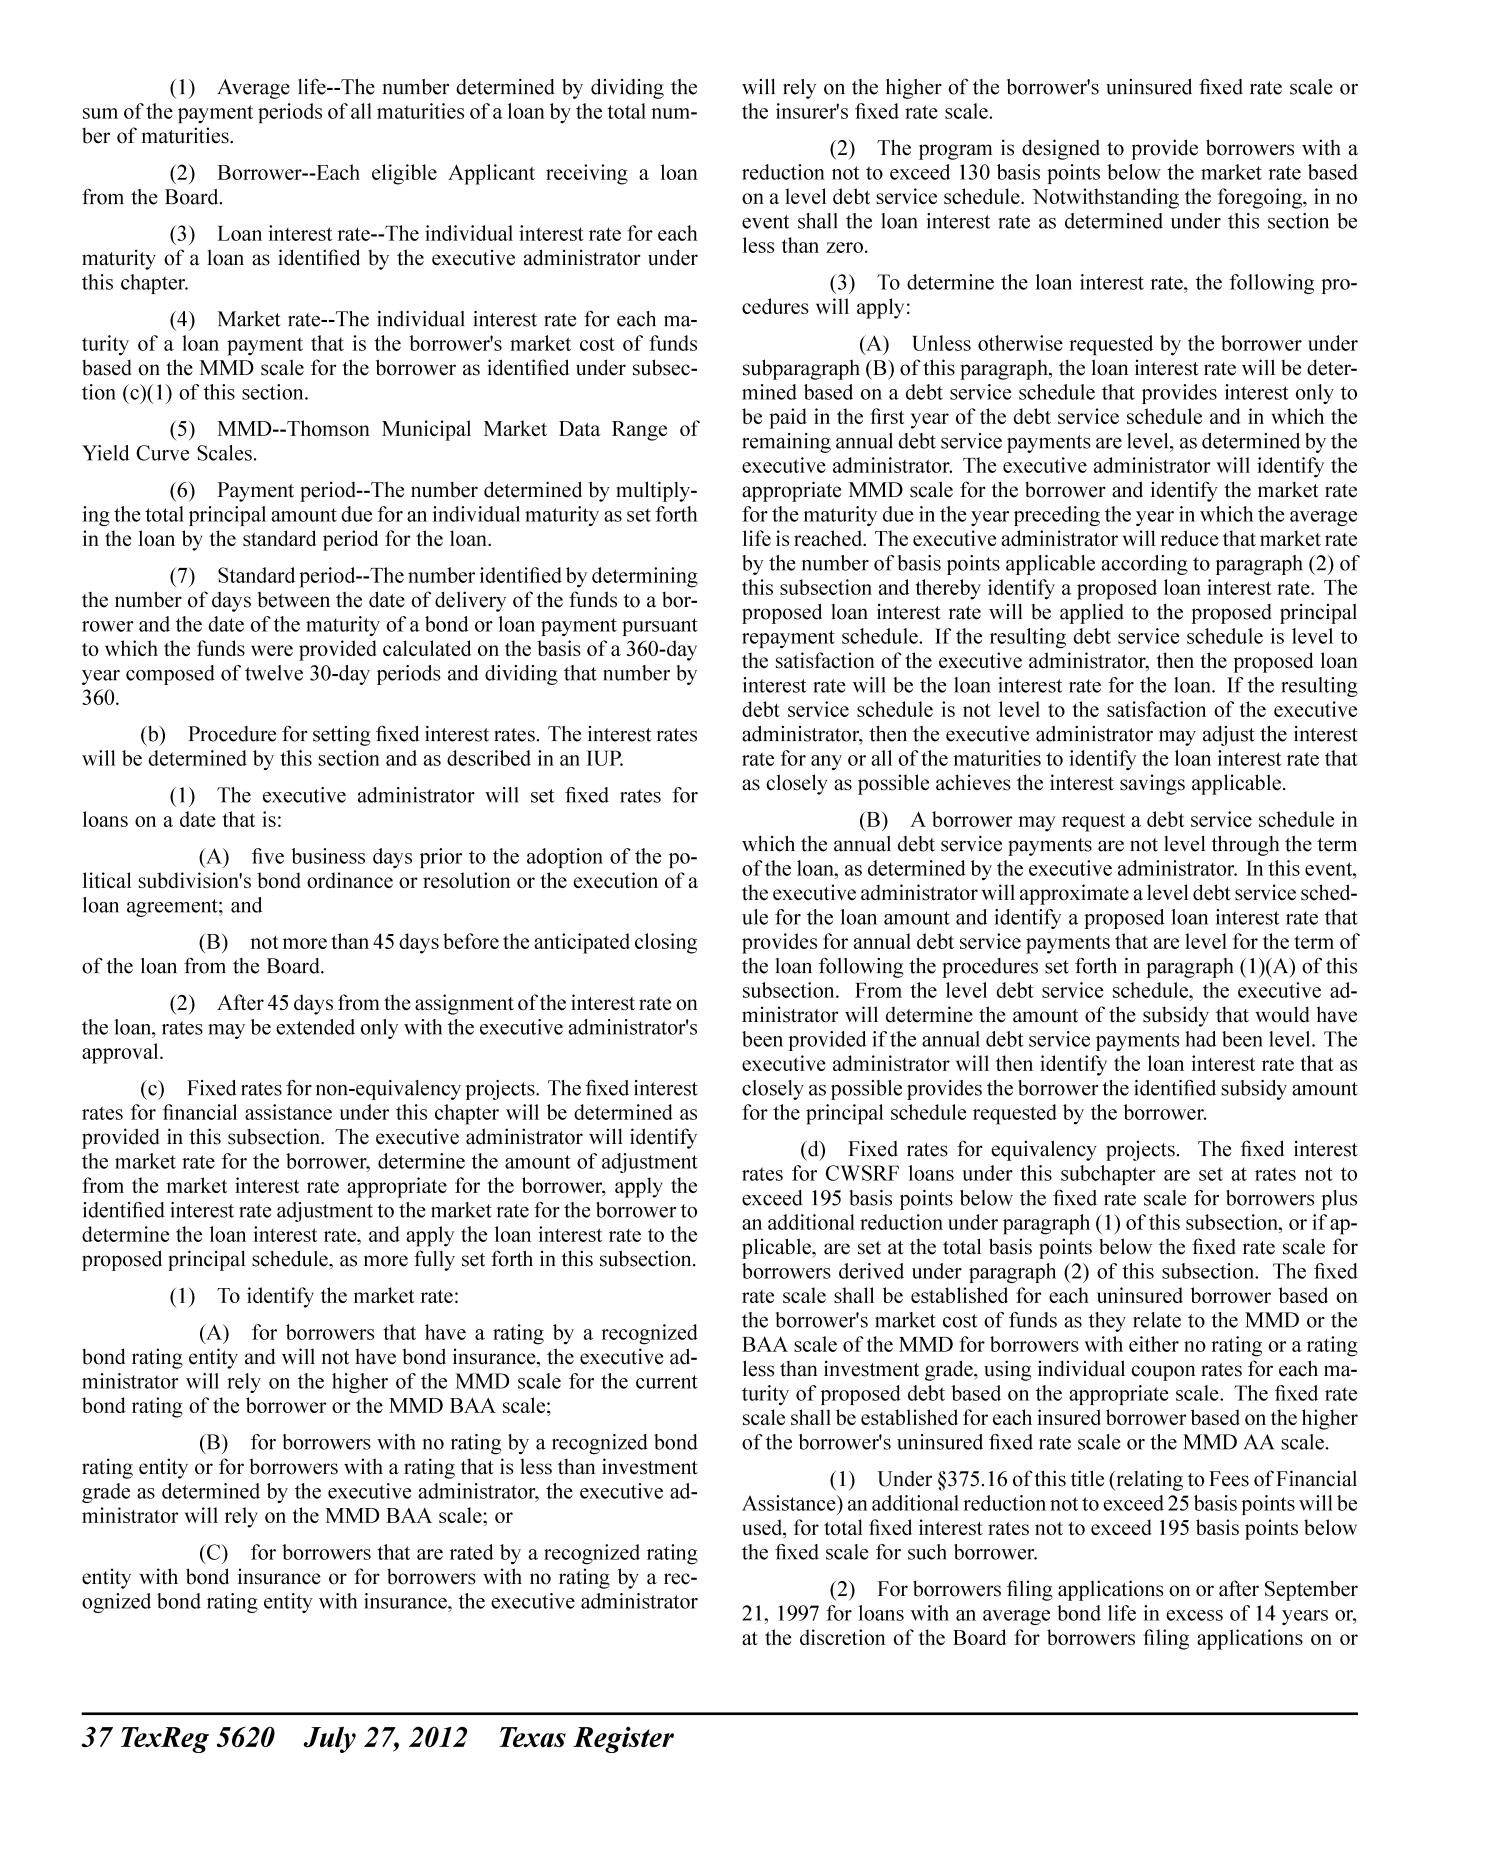 Texas Register, Volume 37, Number 30, Pages 5519-5676, July 27, 2012
                                                
                                                    5620
                                                